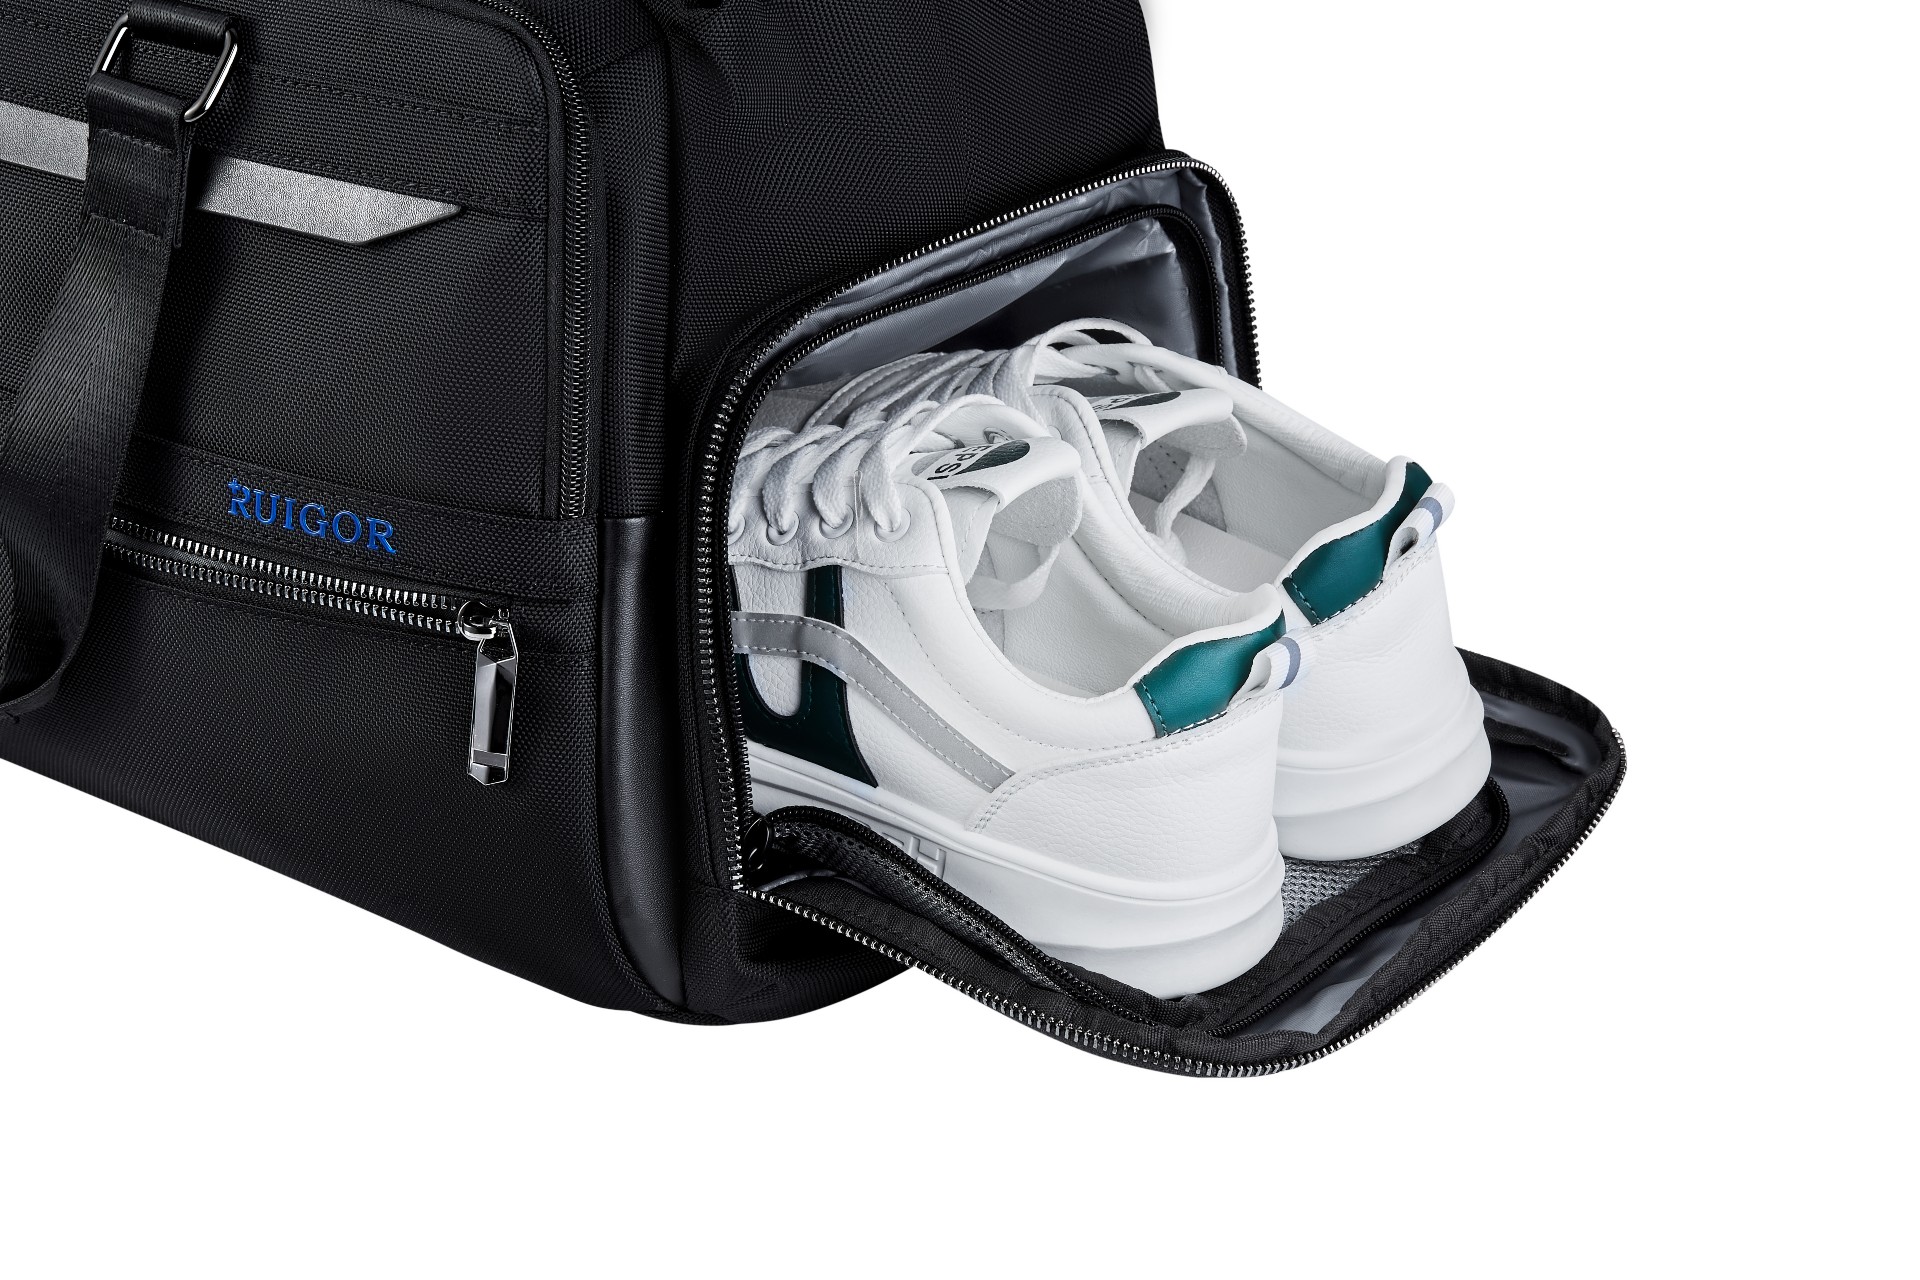 21 Gym Bag Essentials ideas  gym bag essentials, gym bag